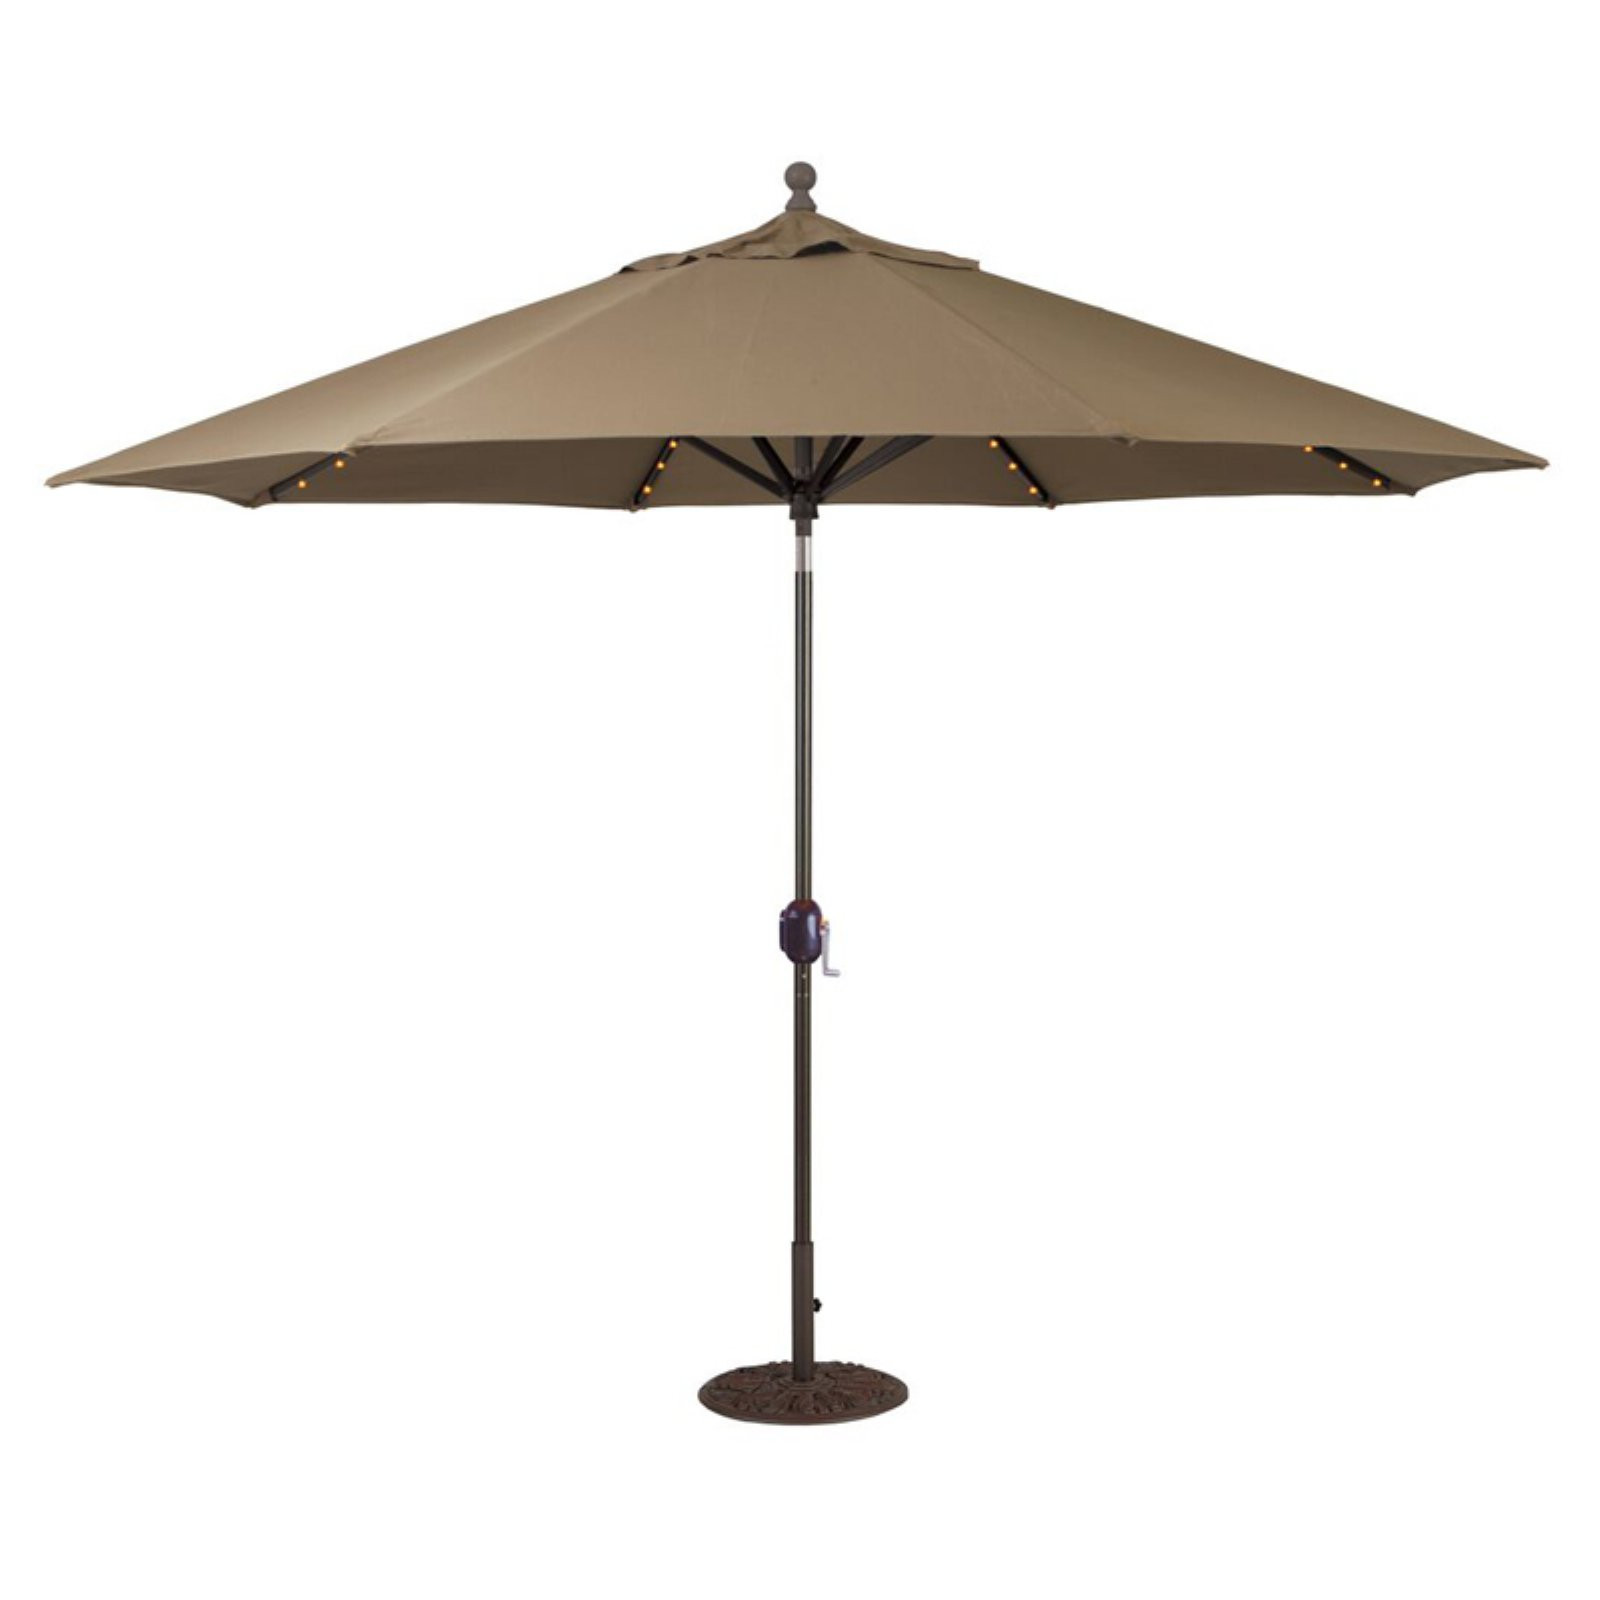 Best ideas about 11 Foot Patio Umbrella
. Save or Pin Galtech Sunbrella 11 ft Auto Tilt Patio Umbrella with LED Now.